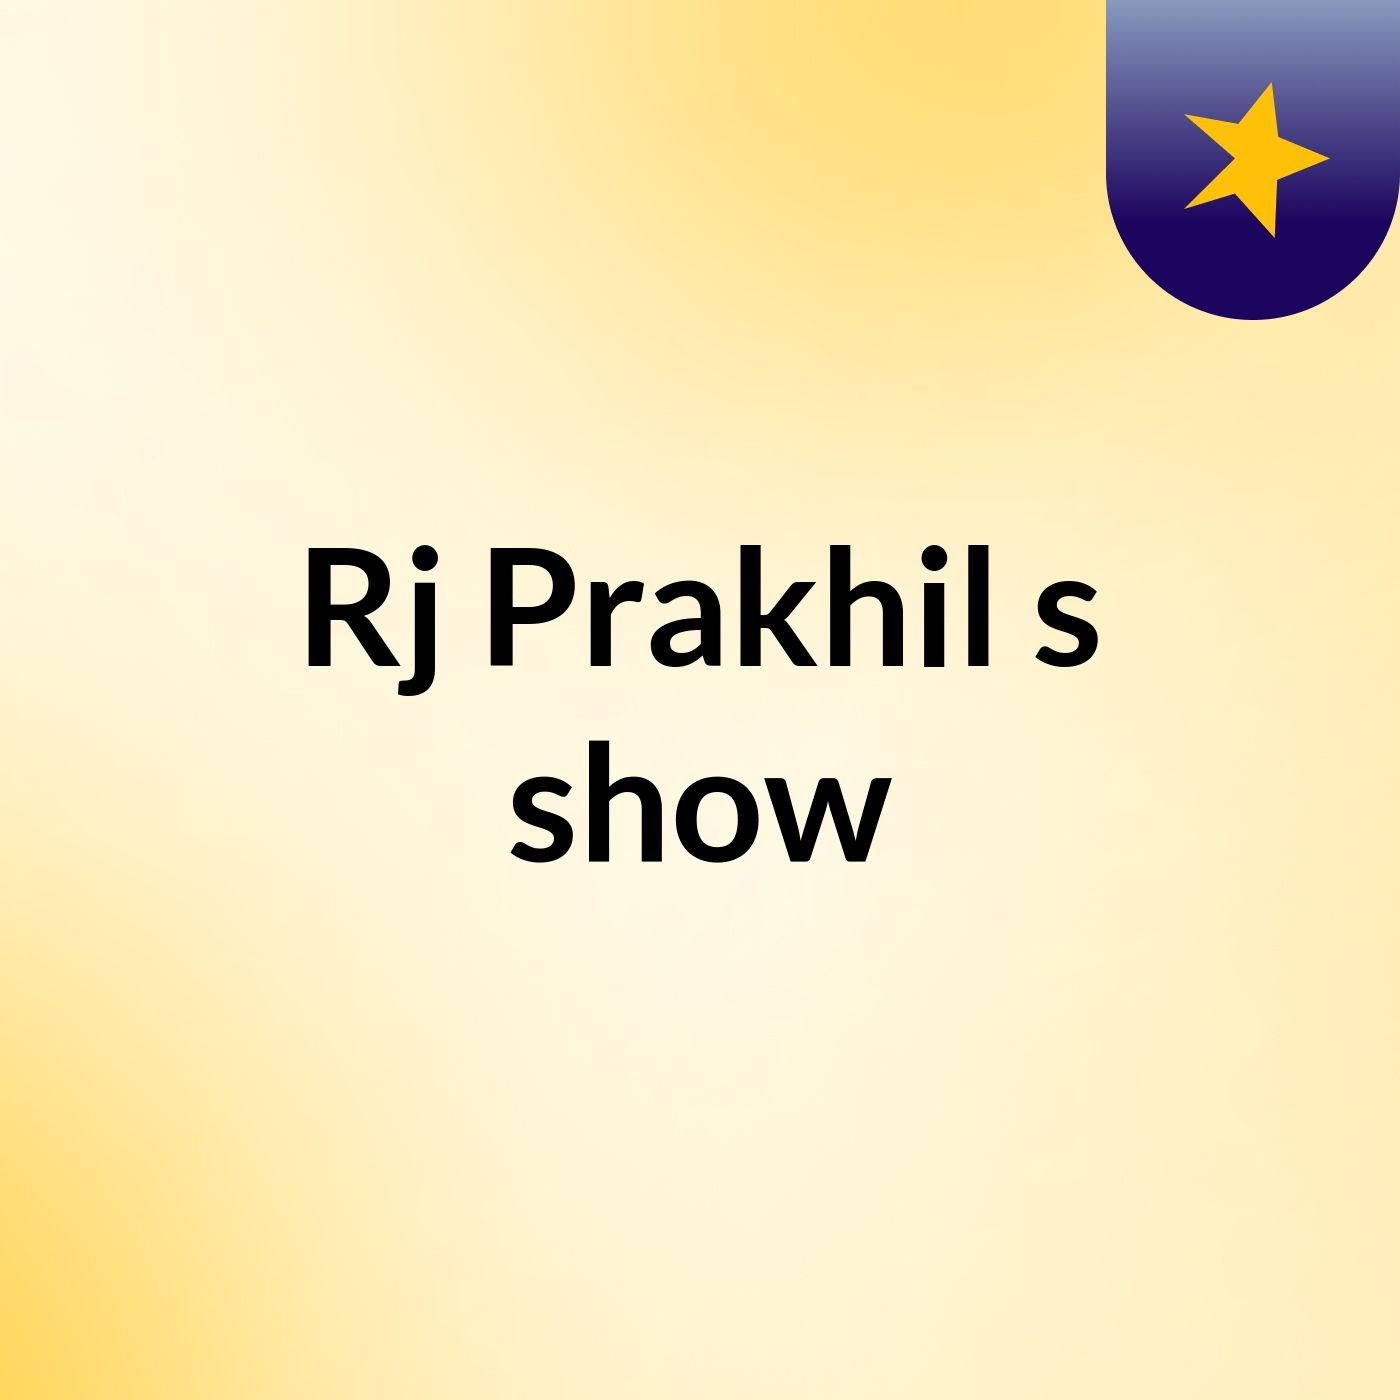 Rj Prakhil's show